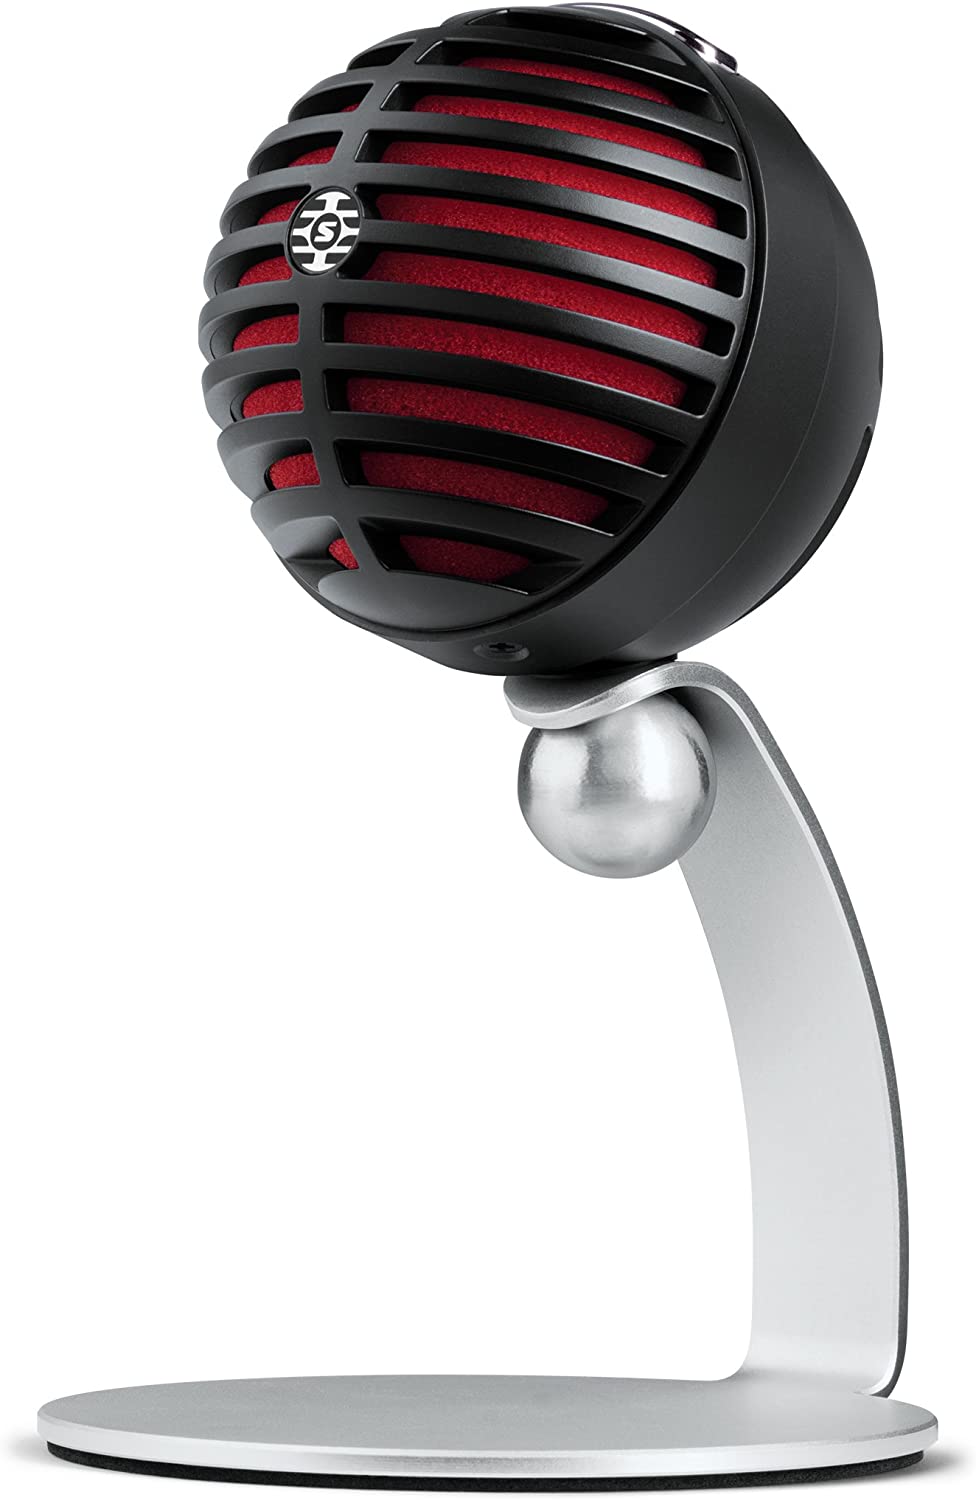 best microphones for iPhone: Shure MV5